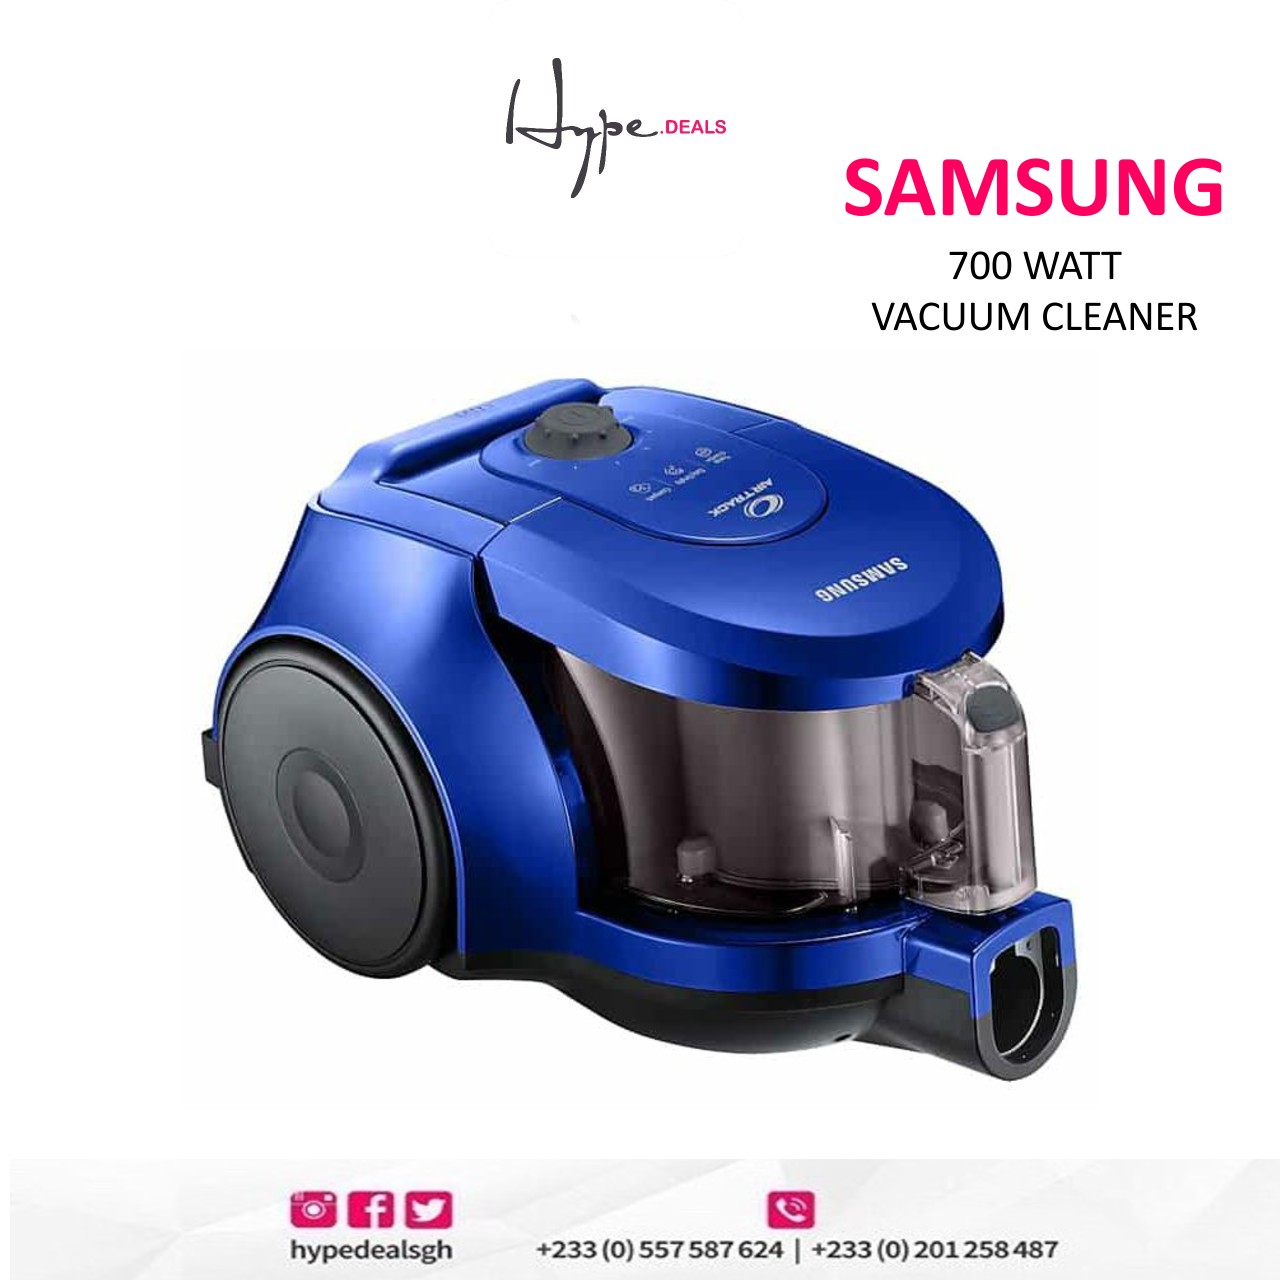 Samsung 700 Watt Vacuum Cleaner (VCC43U0V3D)